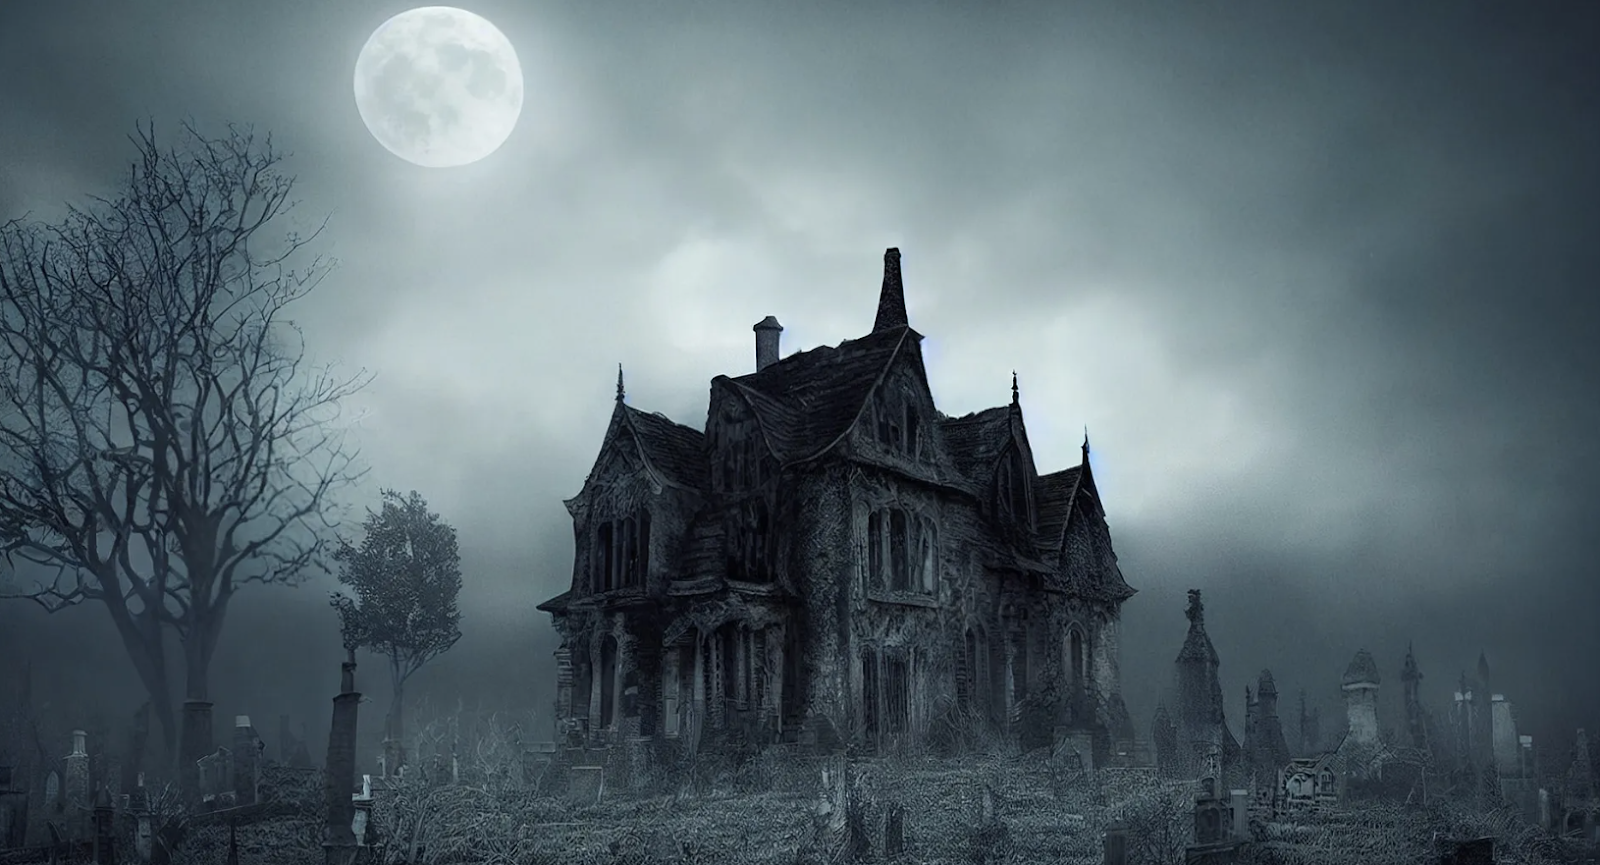 Spooky abandoned haunted house